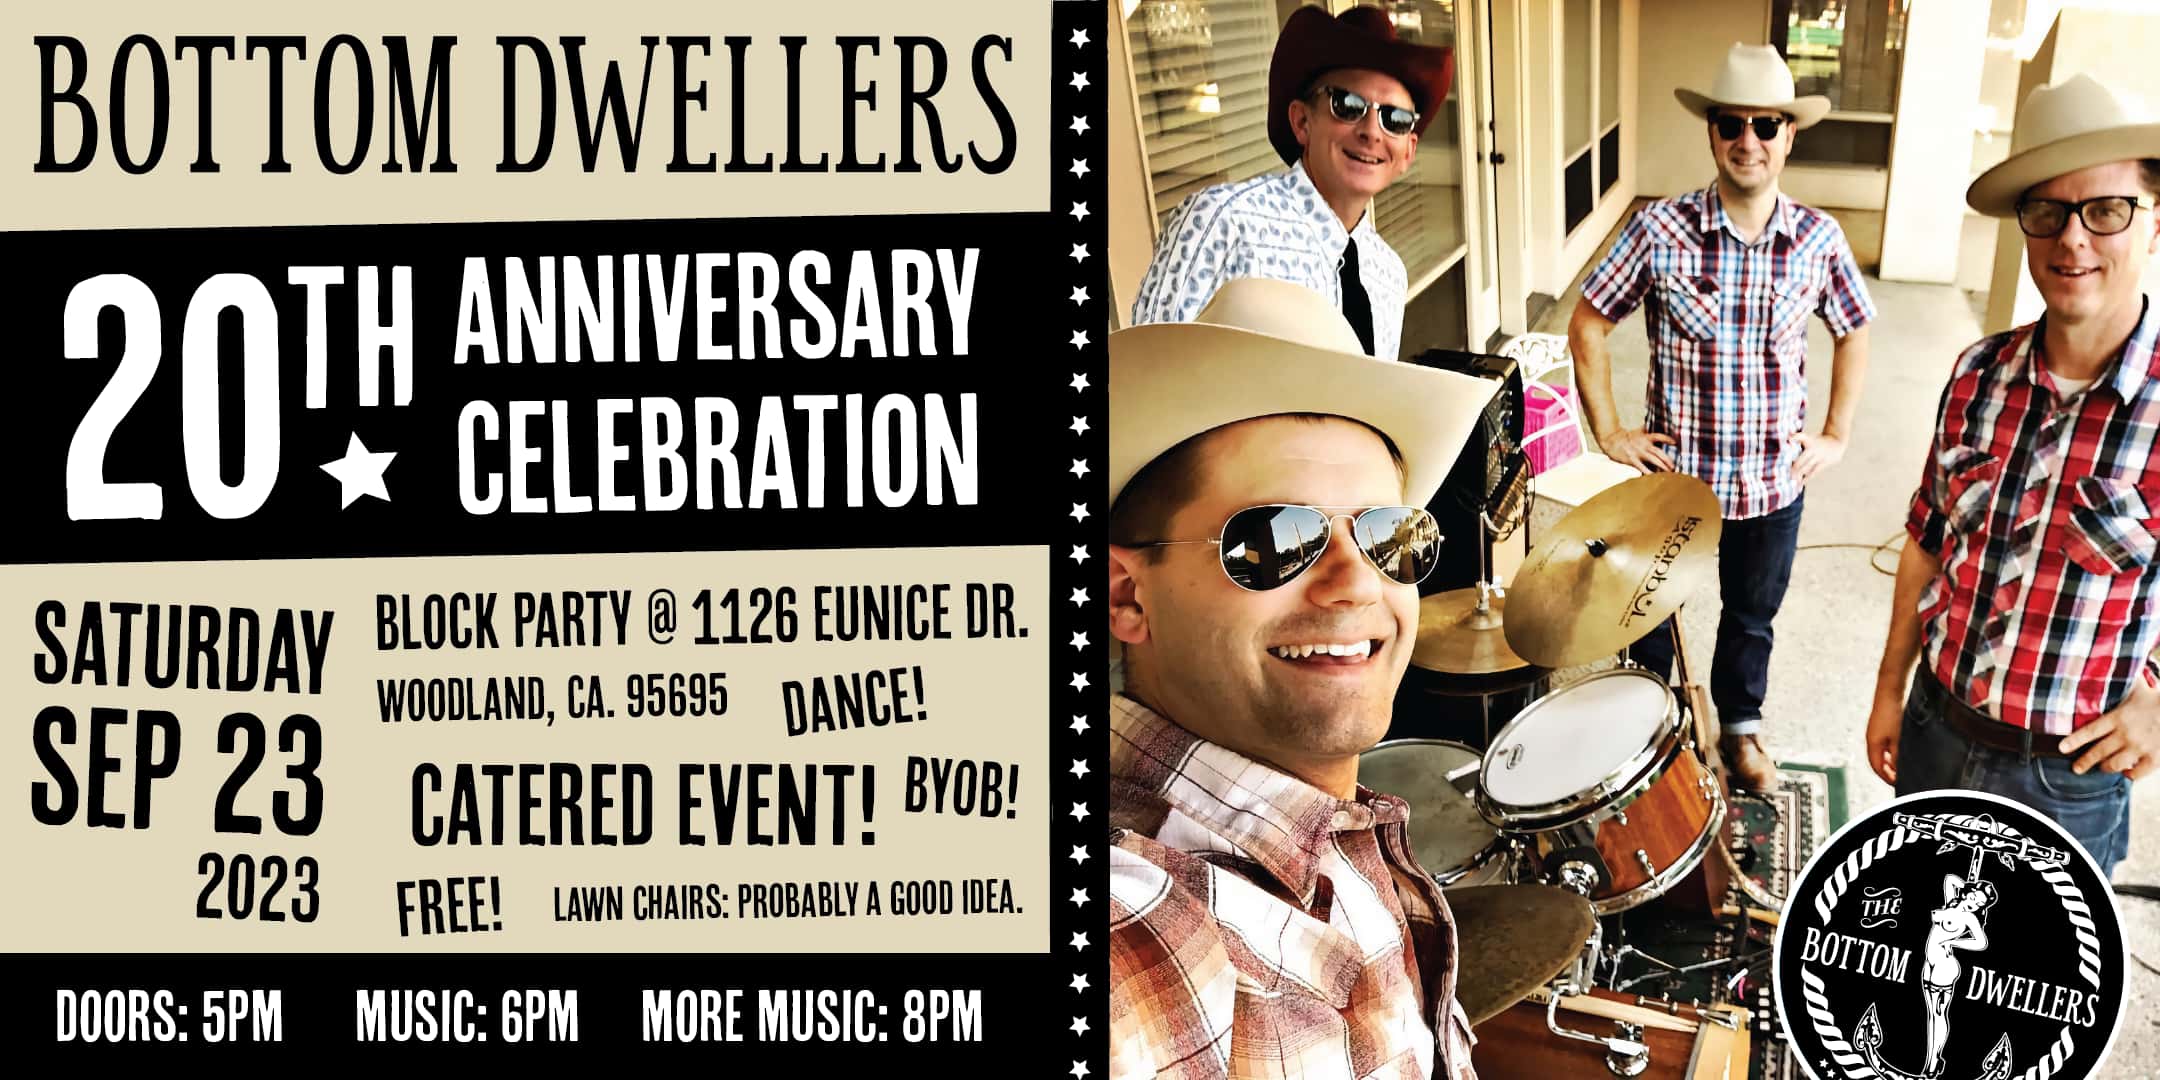 Bottom Dwellers 20th Anniversary Celebration poster.